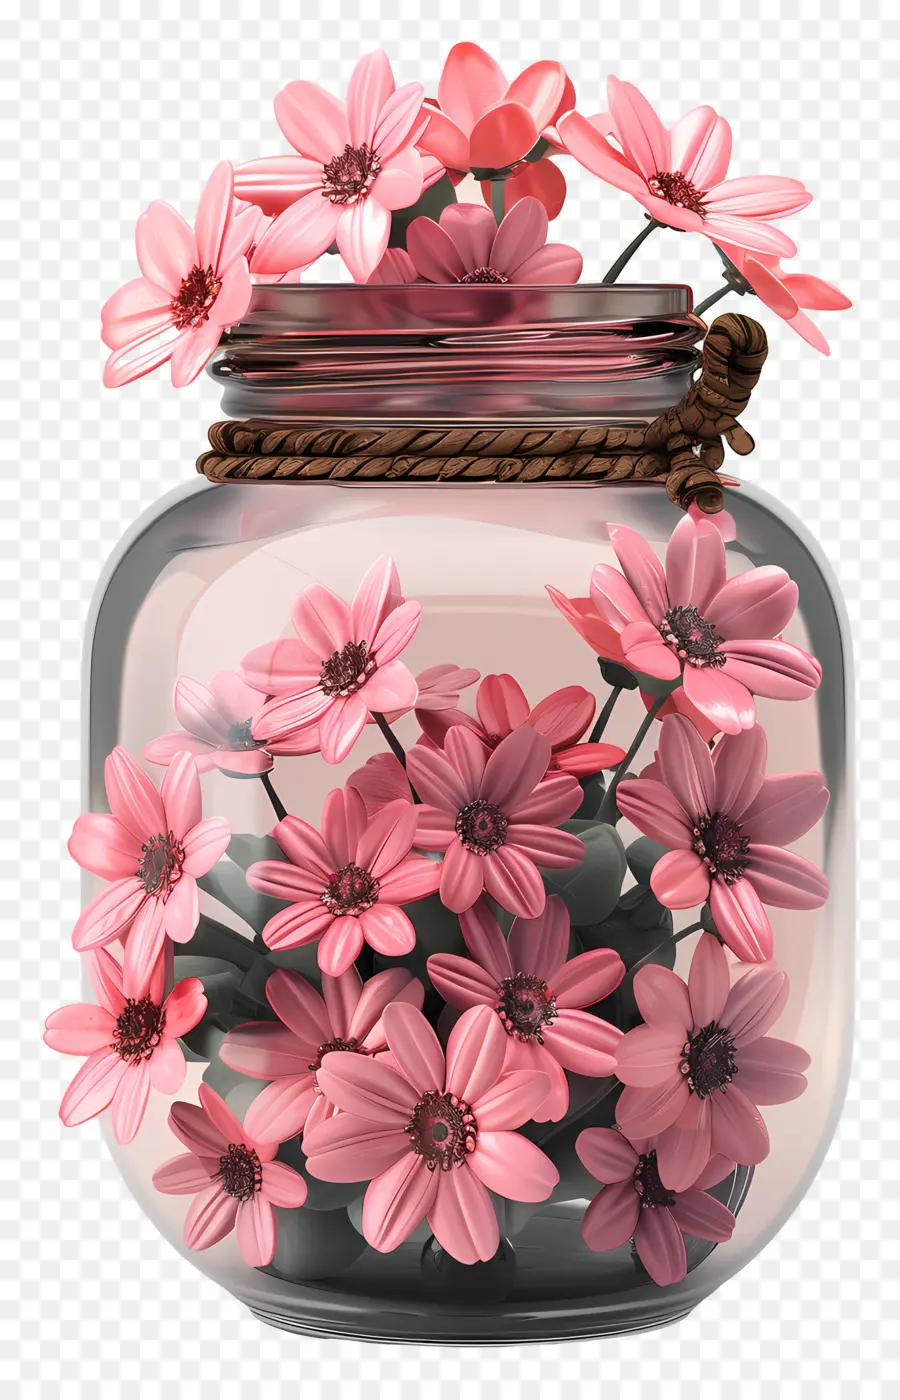 Blumenvase - Rosa Gänseblümchen in klarer Glasvase